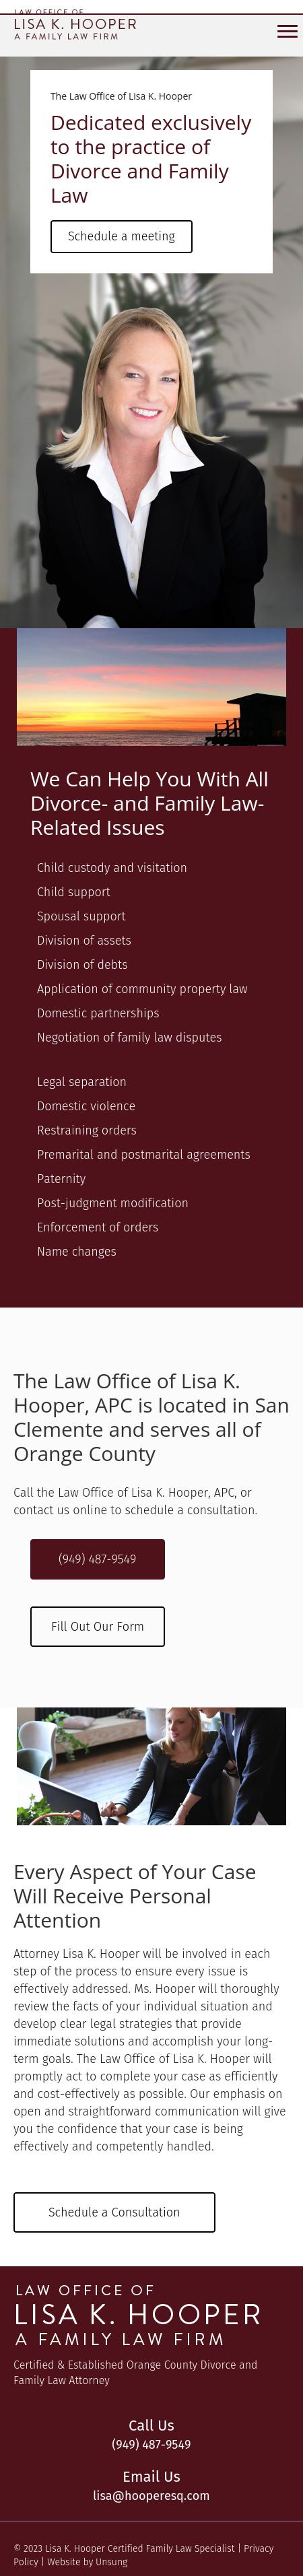 Law Office of Lisa K. Hooper, APLC - San Clemente CA Lawyers